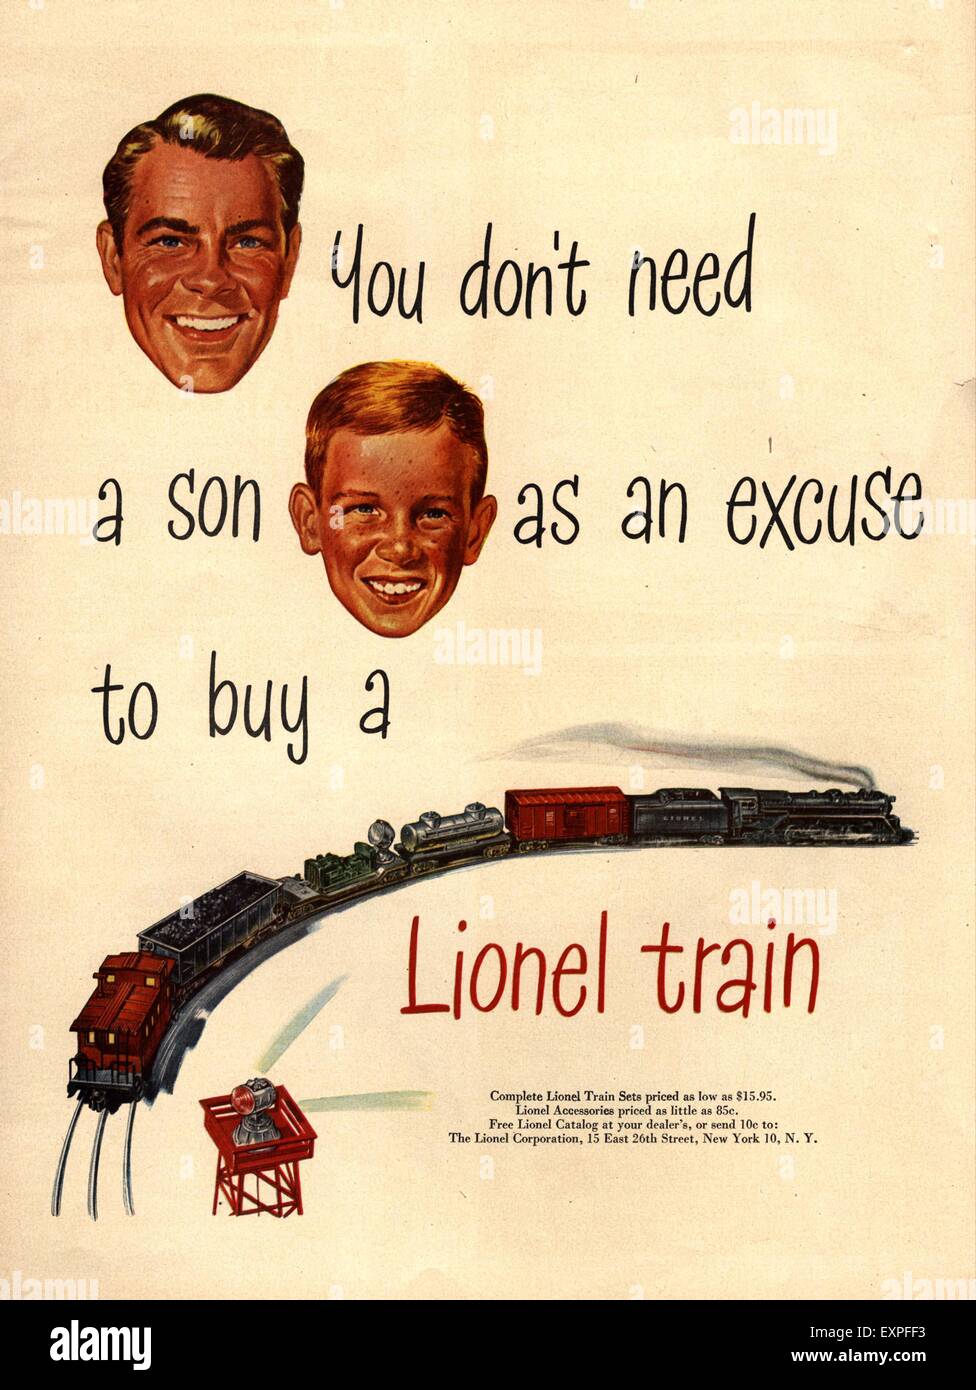 lionel trains uk